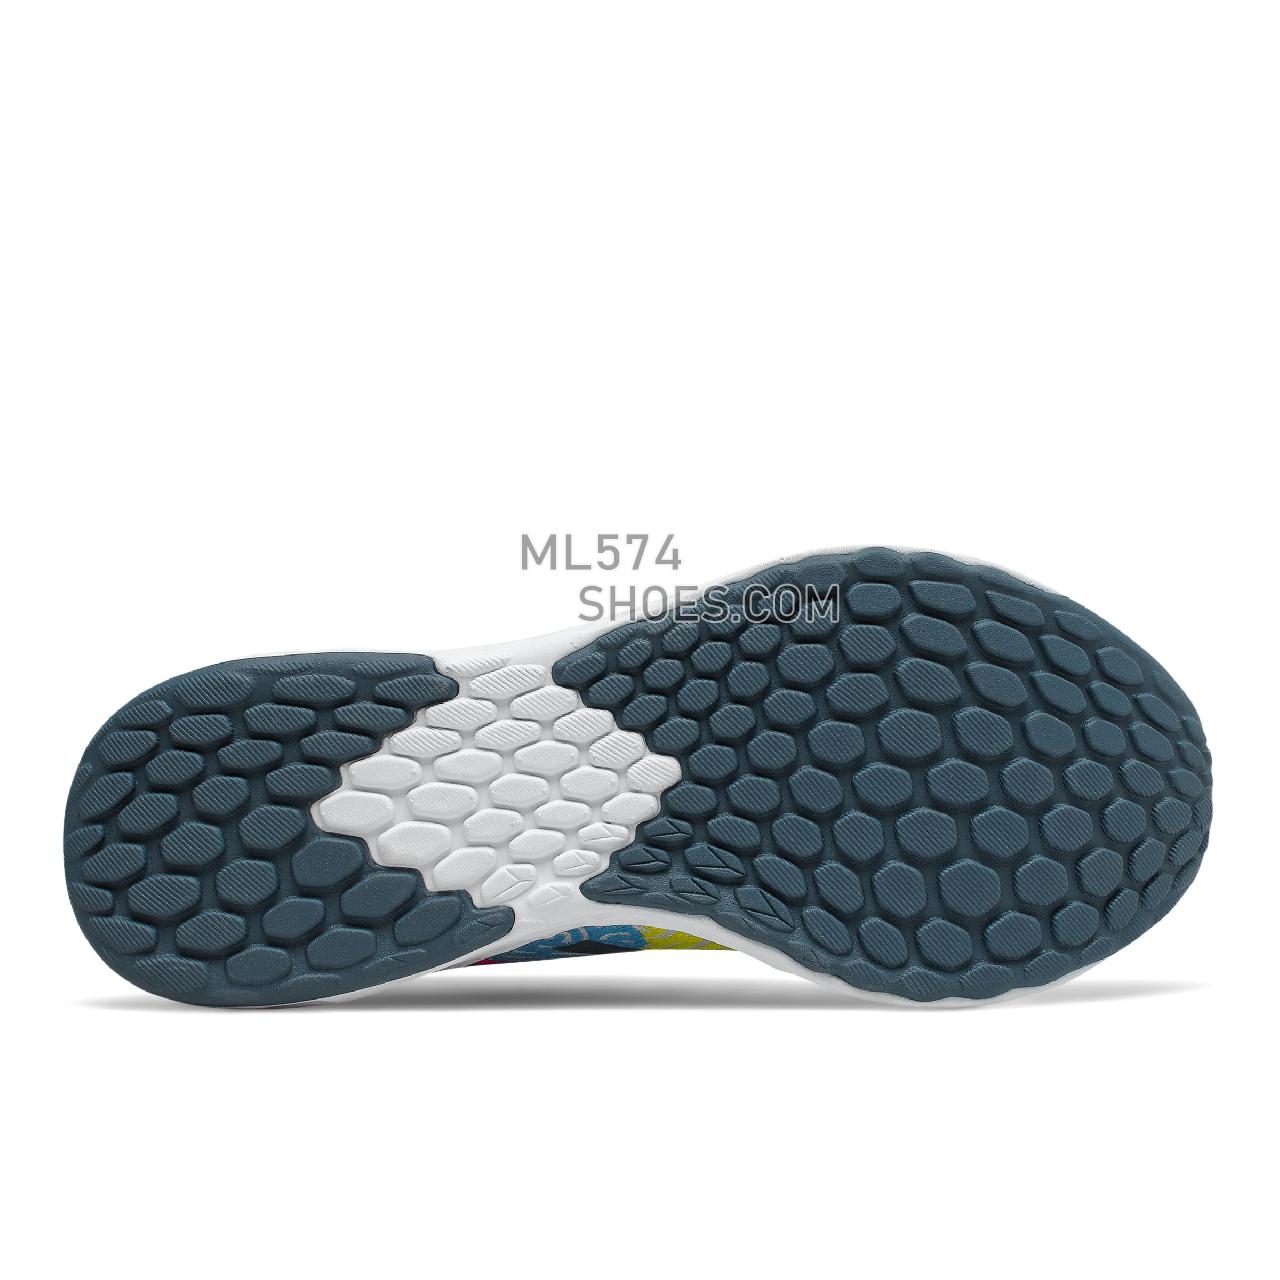 New Balance Fresh Foam Tempo - Men's Classic Sneakers - White with helium and sulphur yellow - MTMPOWM